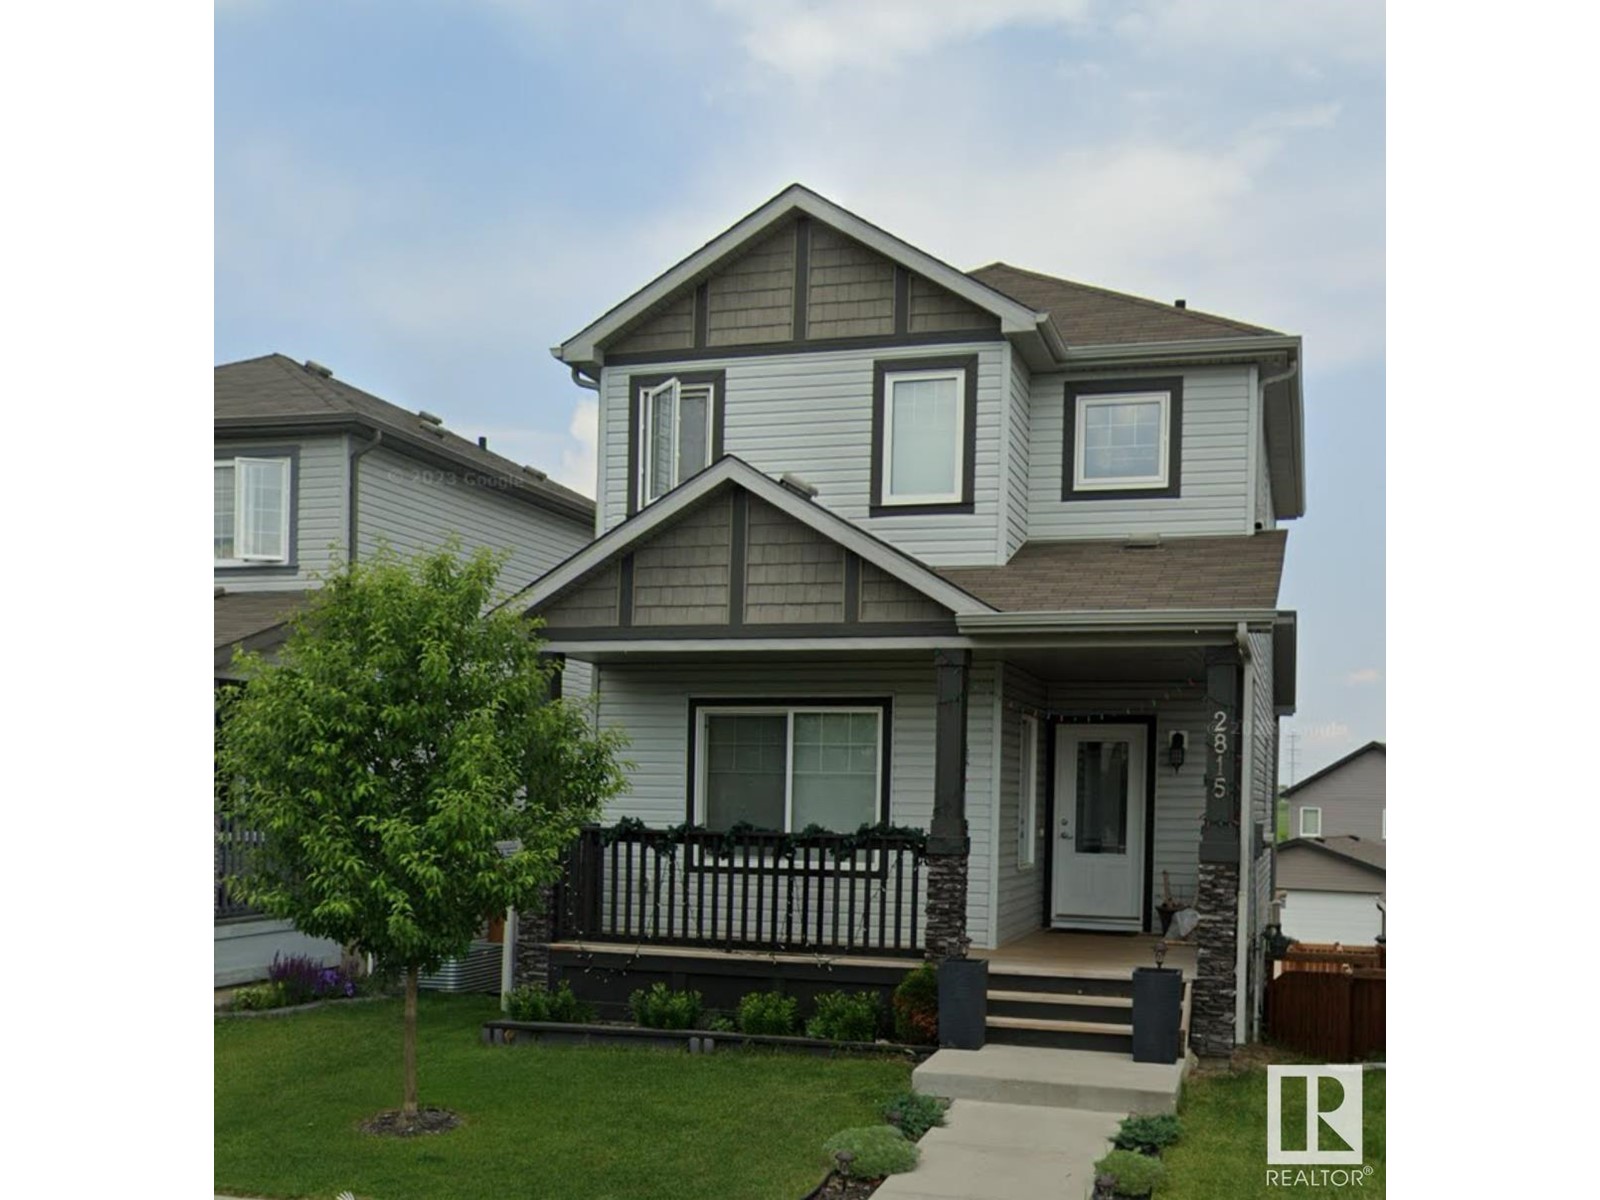 4 Bedroom Residential Home For Sale | 2815 12 St Nw | Edmonton | T6T0V8